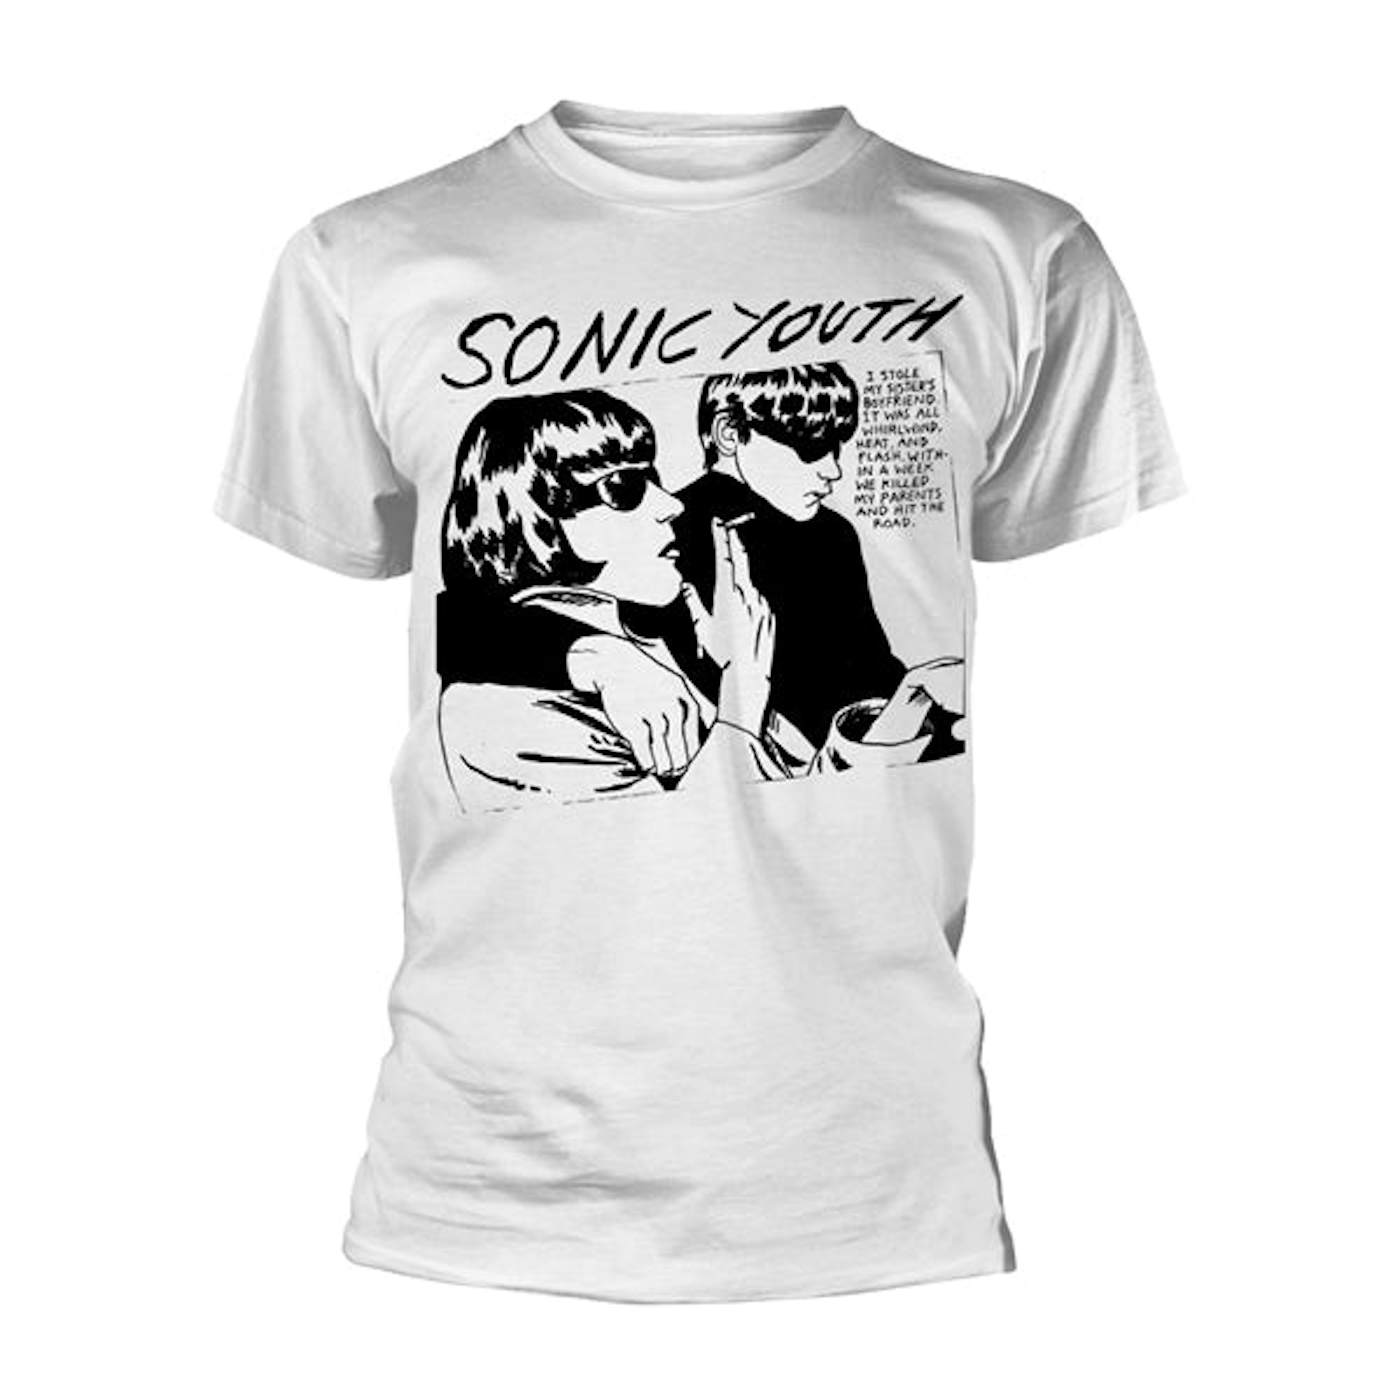 Sonic Youth T-Shirt - Goo Album Cover (White)